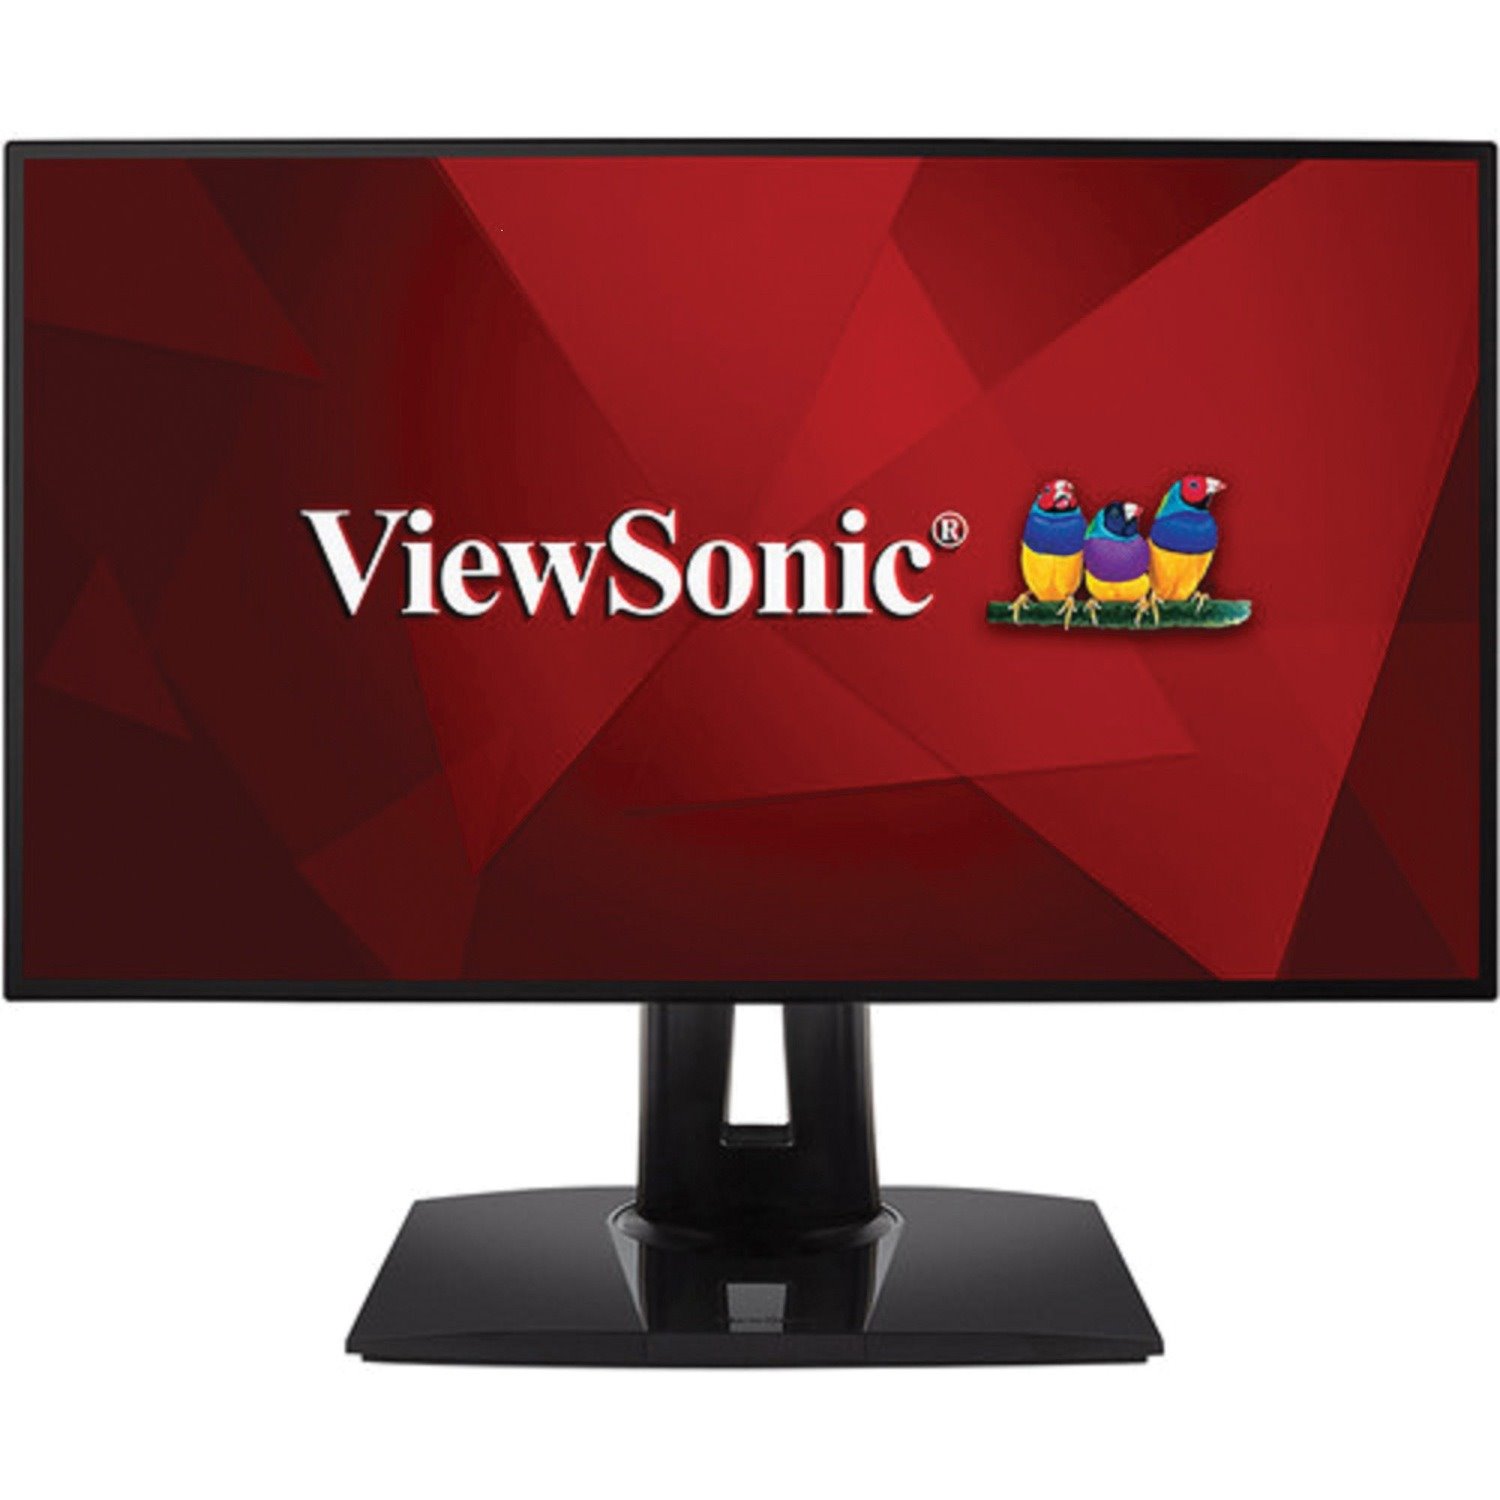 ViewSonic 24" ColorPro 1080p IPS Monitor with sRGB and Ergonomics